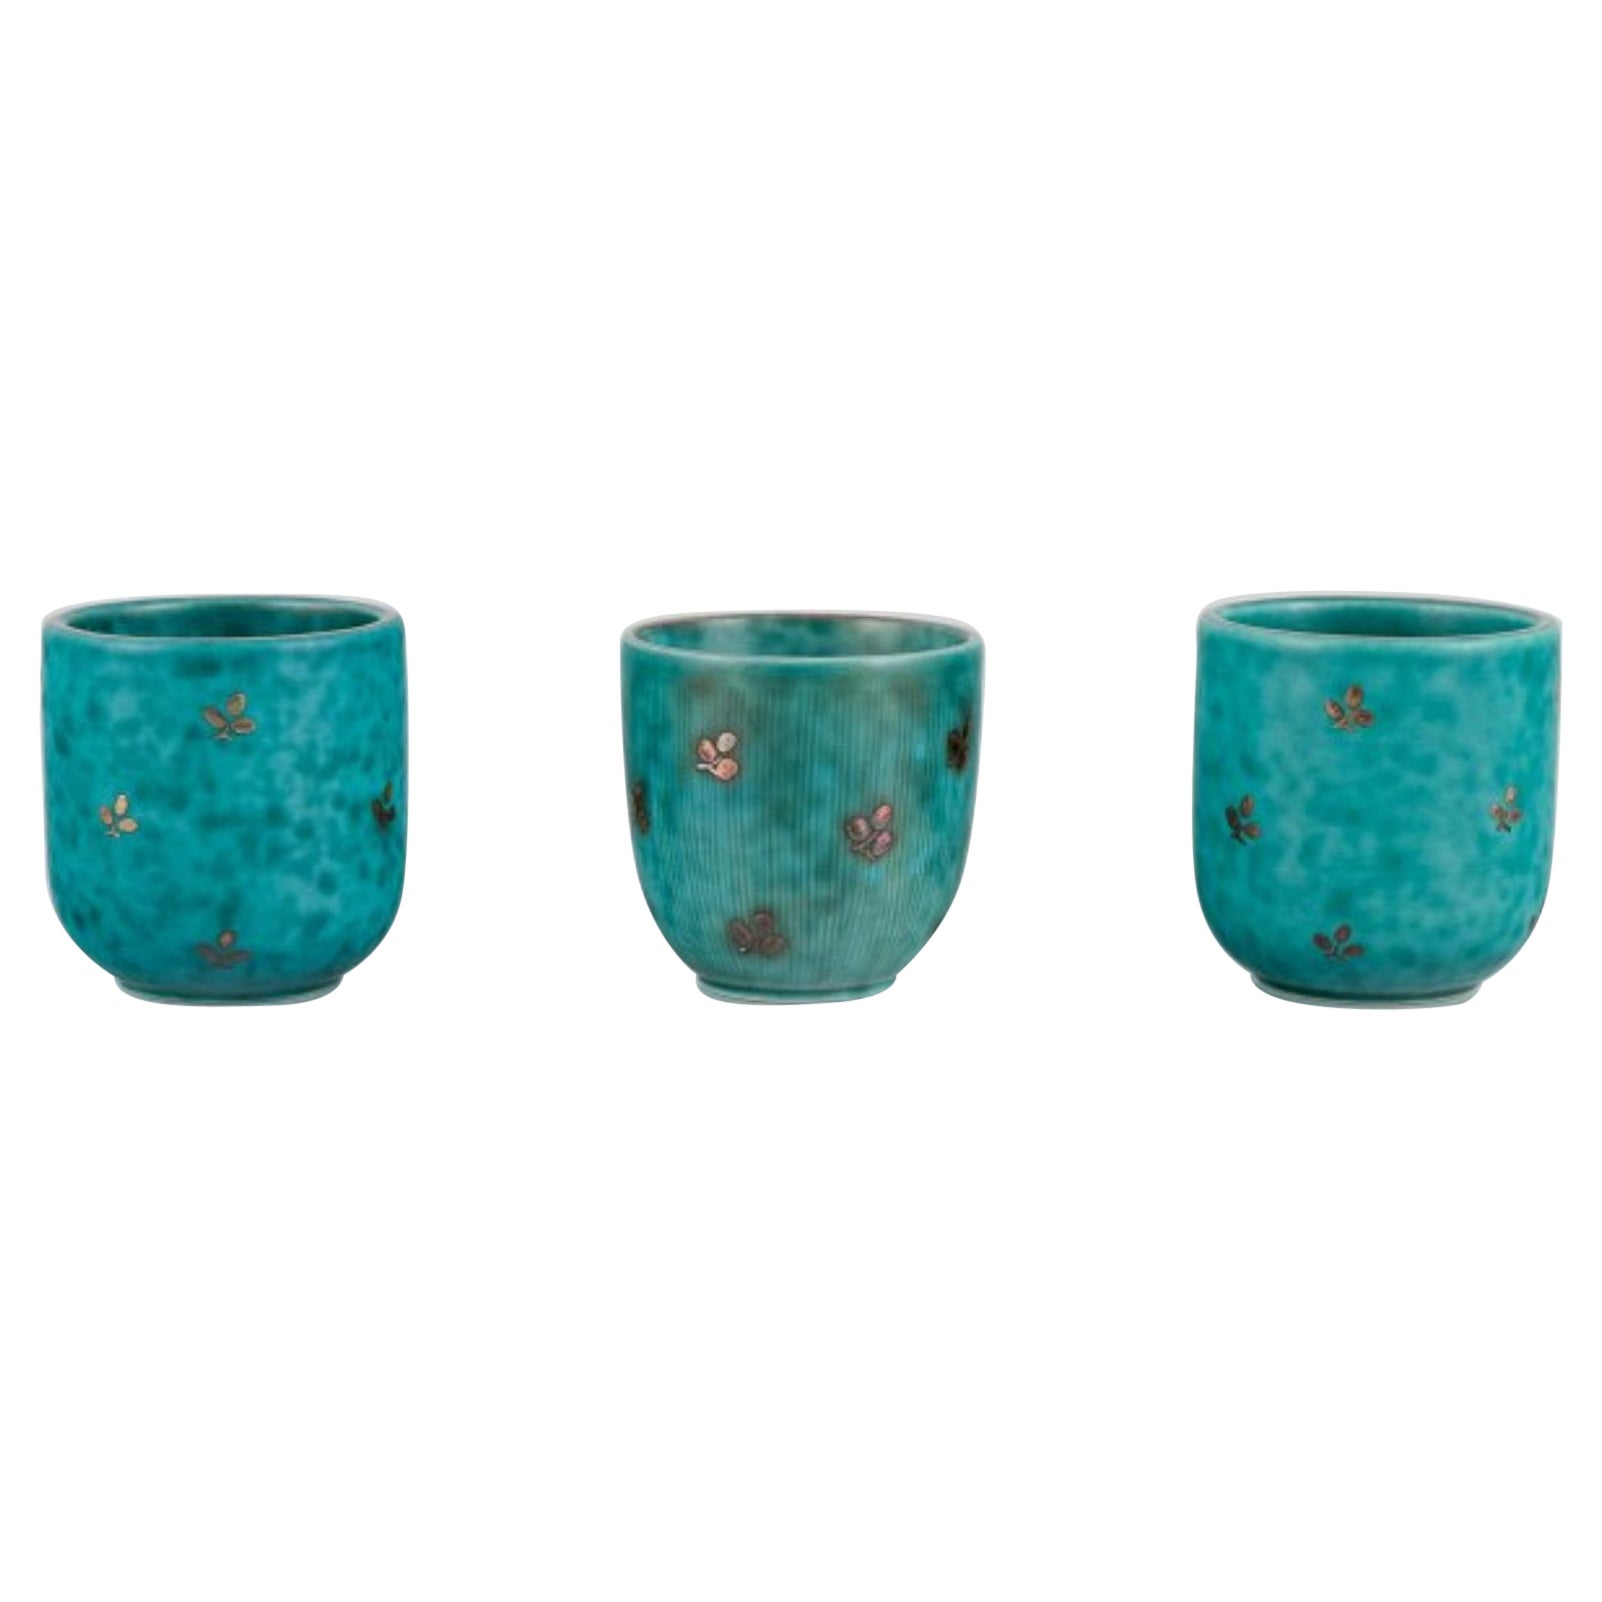 Wilhelm Kåge for Gustavsberg. Three small "Argenta" ceramic vases. 